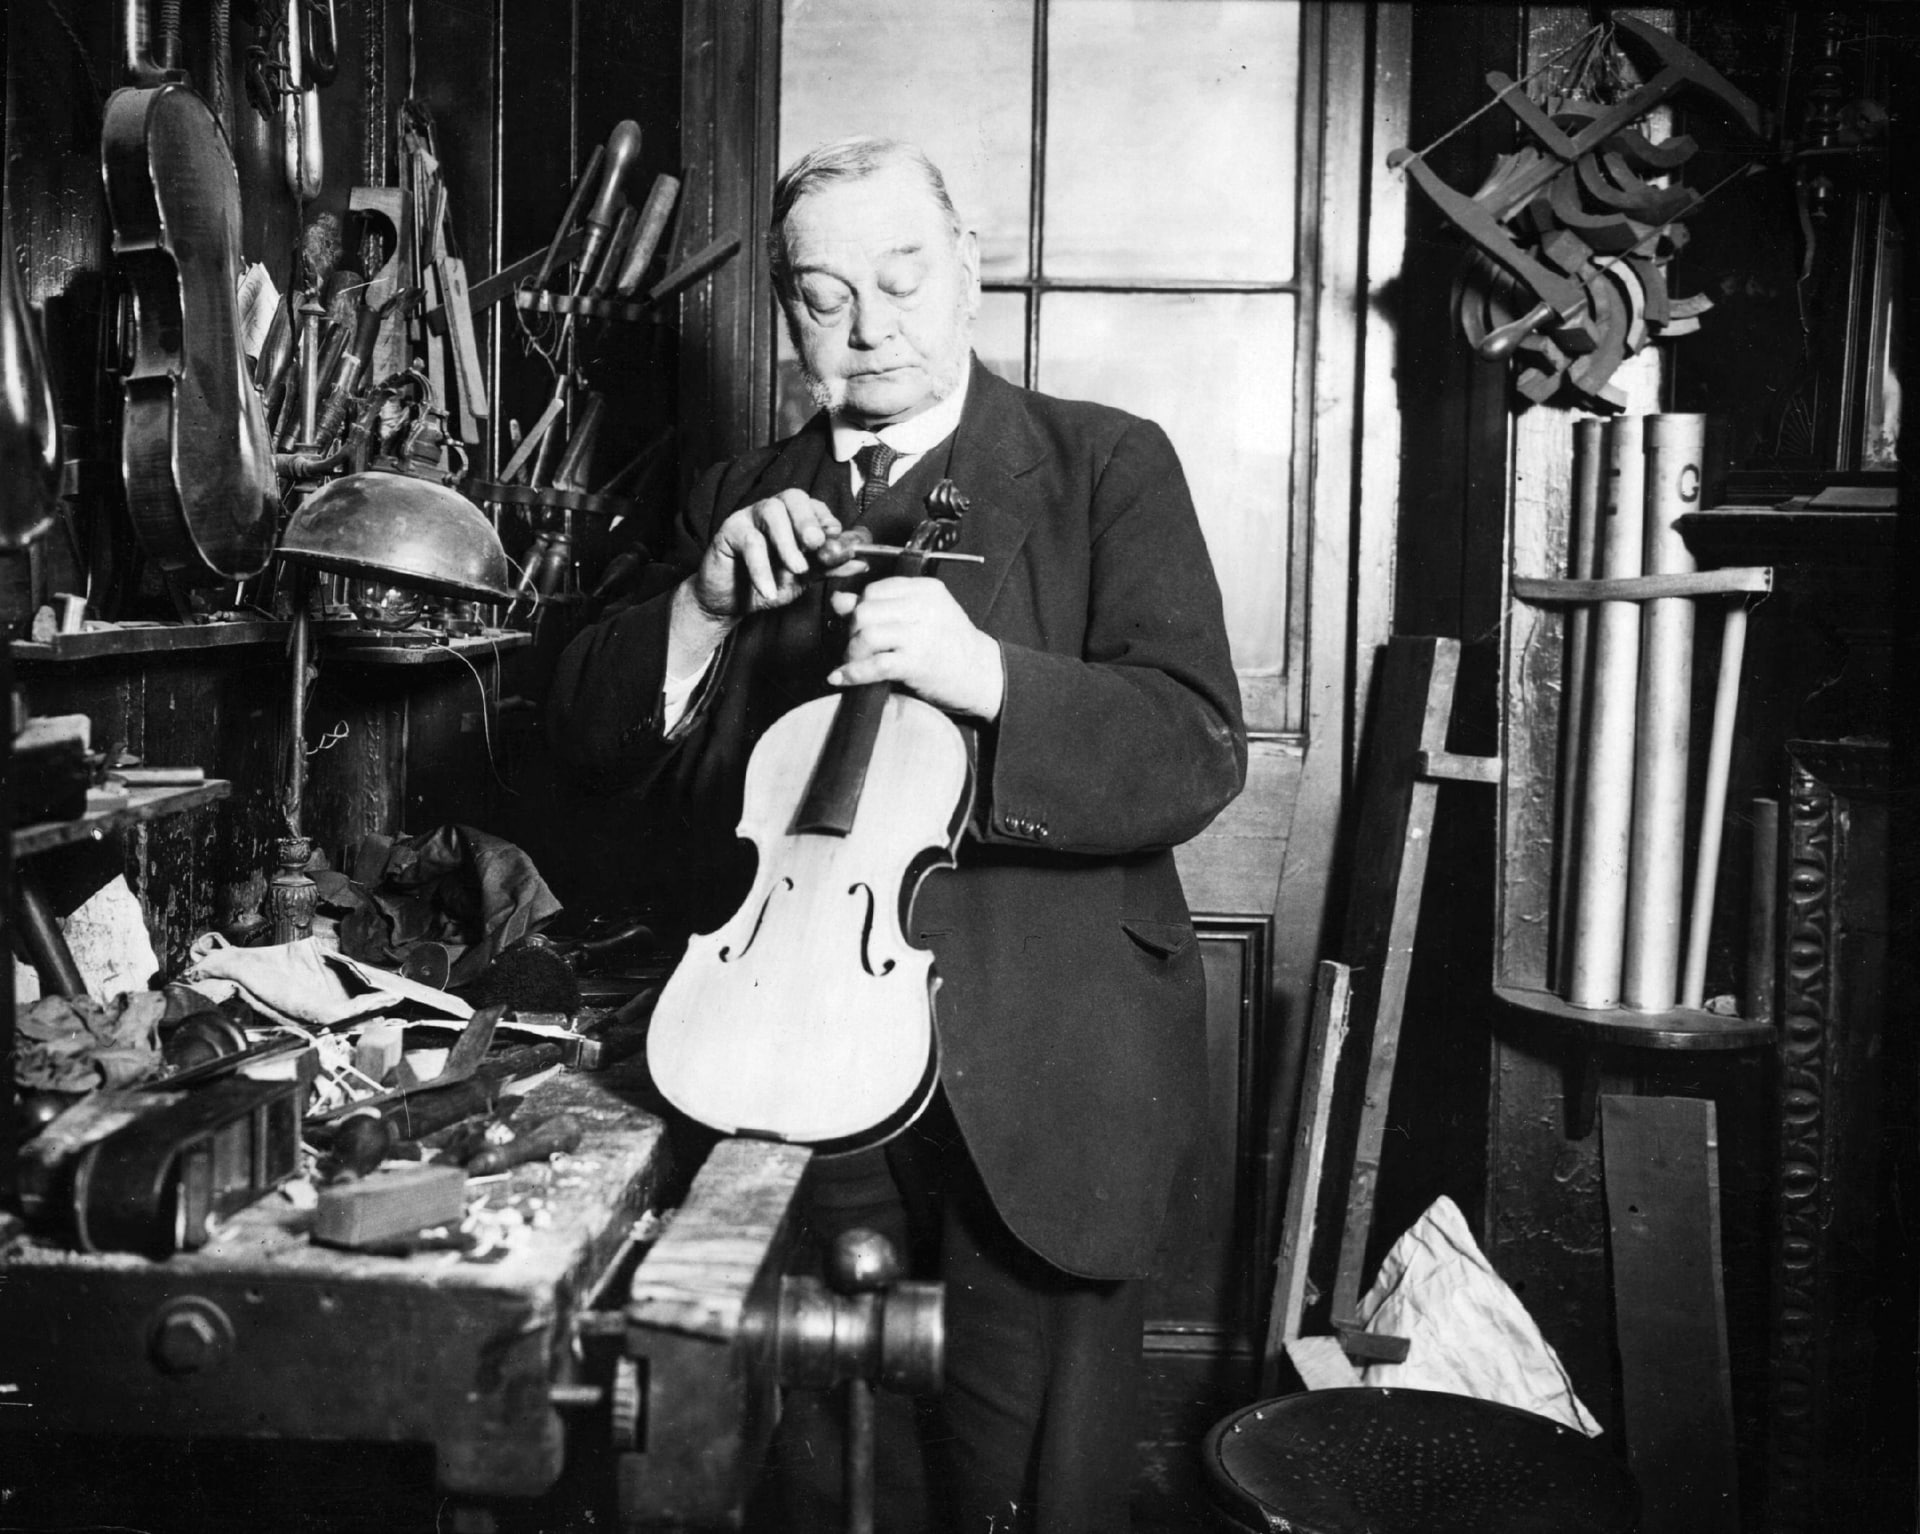 1925: Mr Glenister fabbrica violini per hobby.